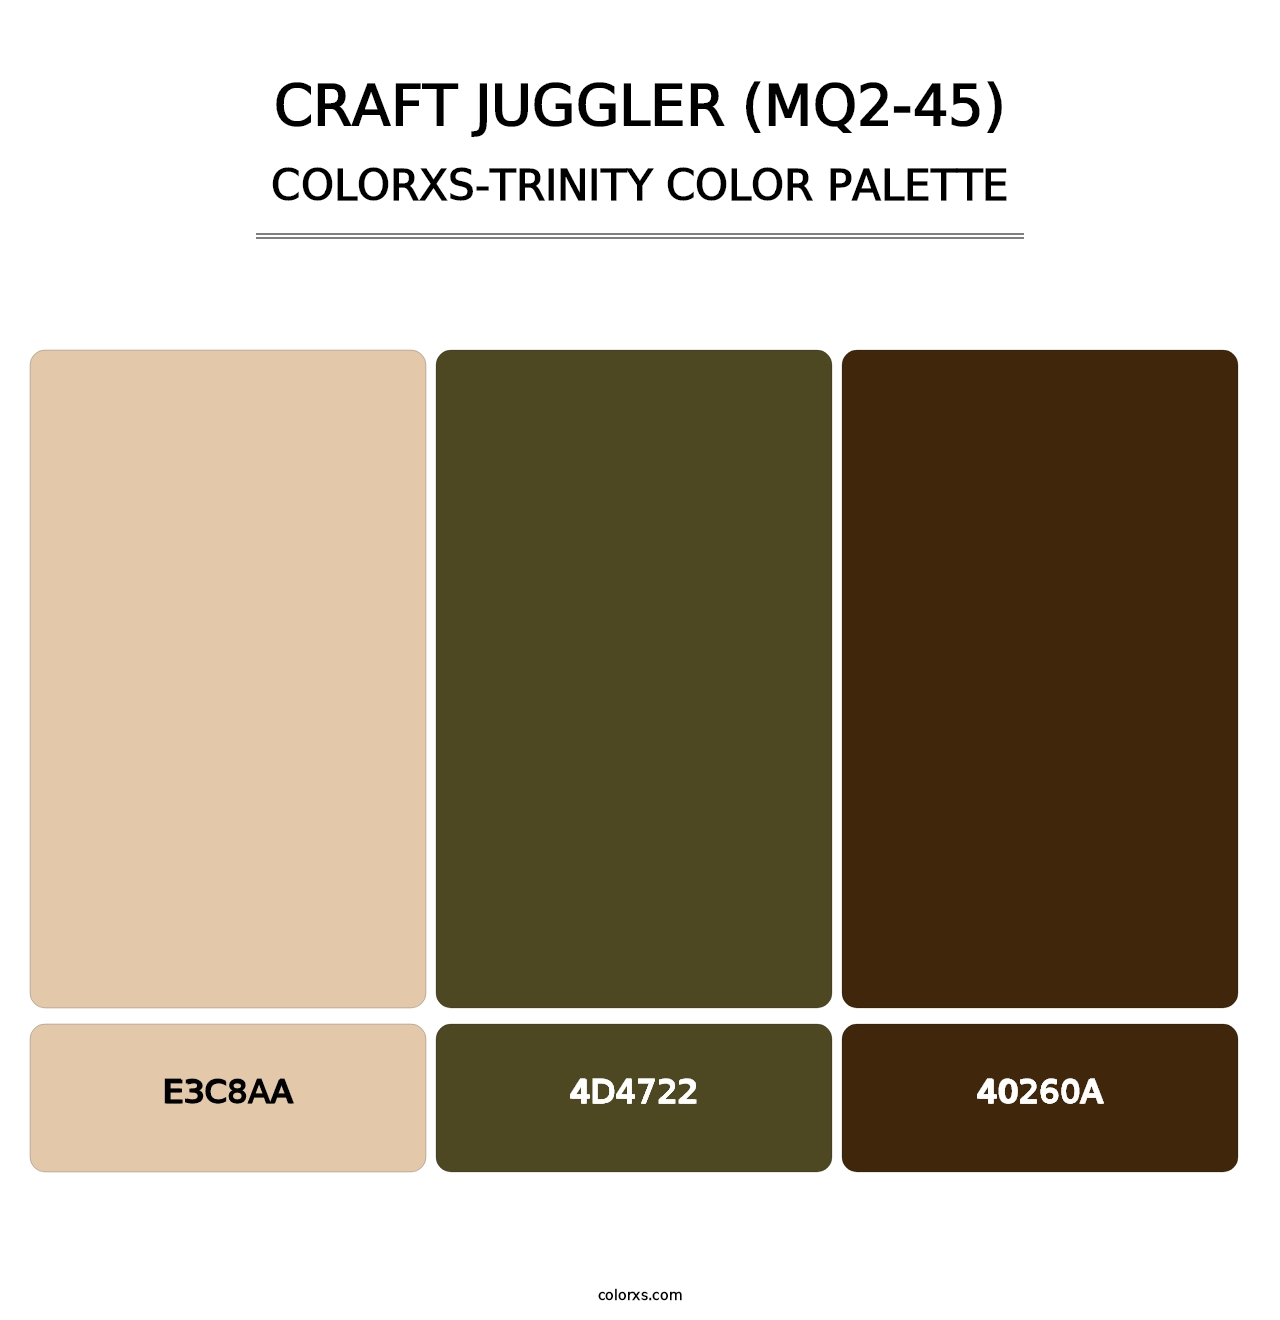 Craft Juggler (MQ2-45) - Colorxs Trinity Palette